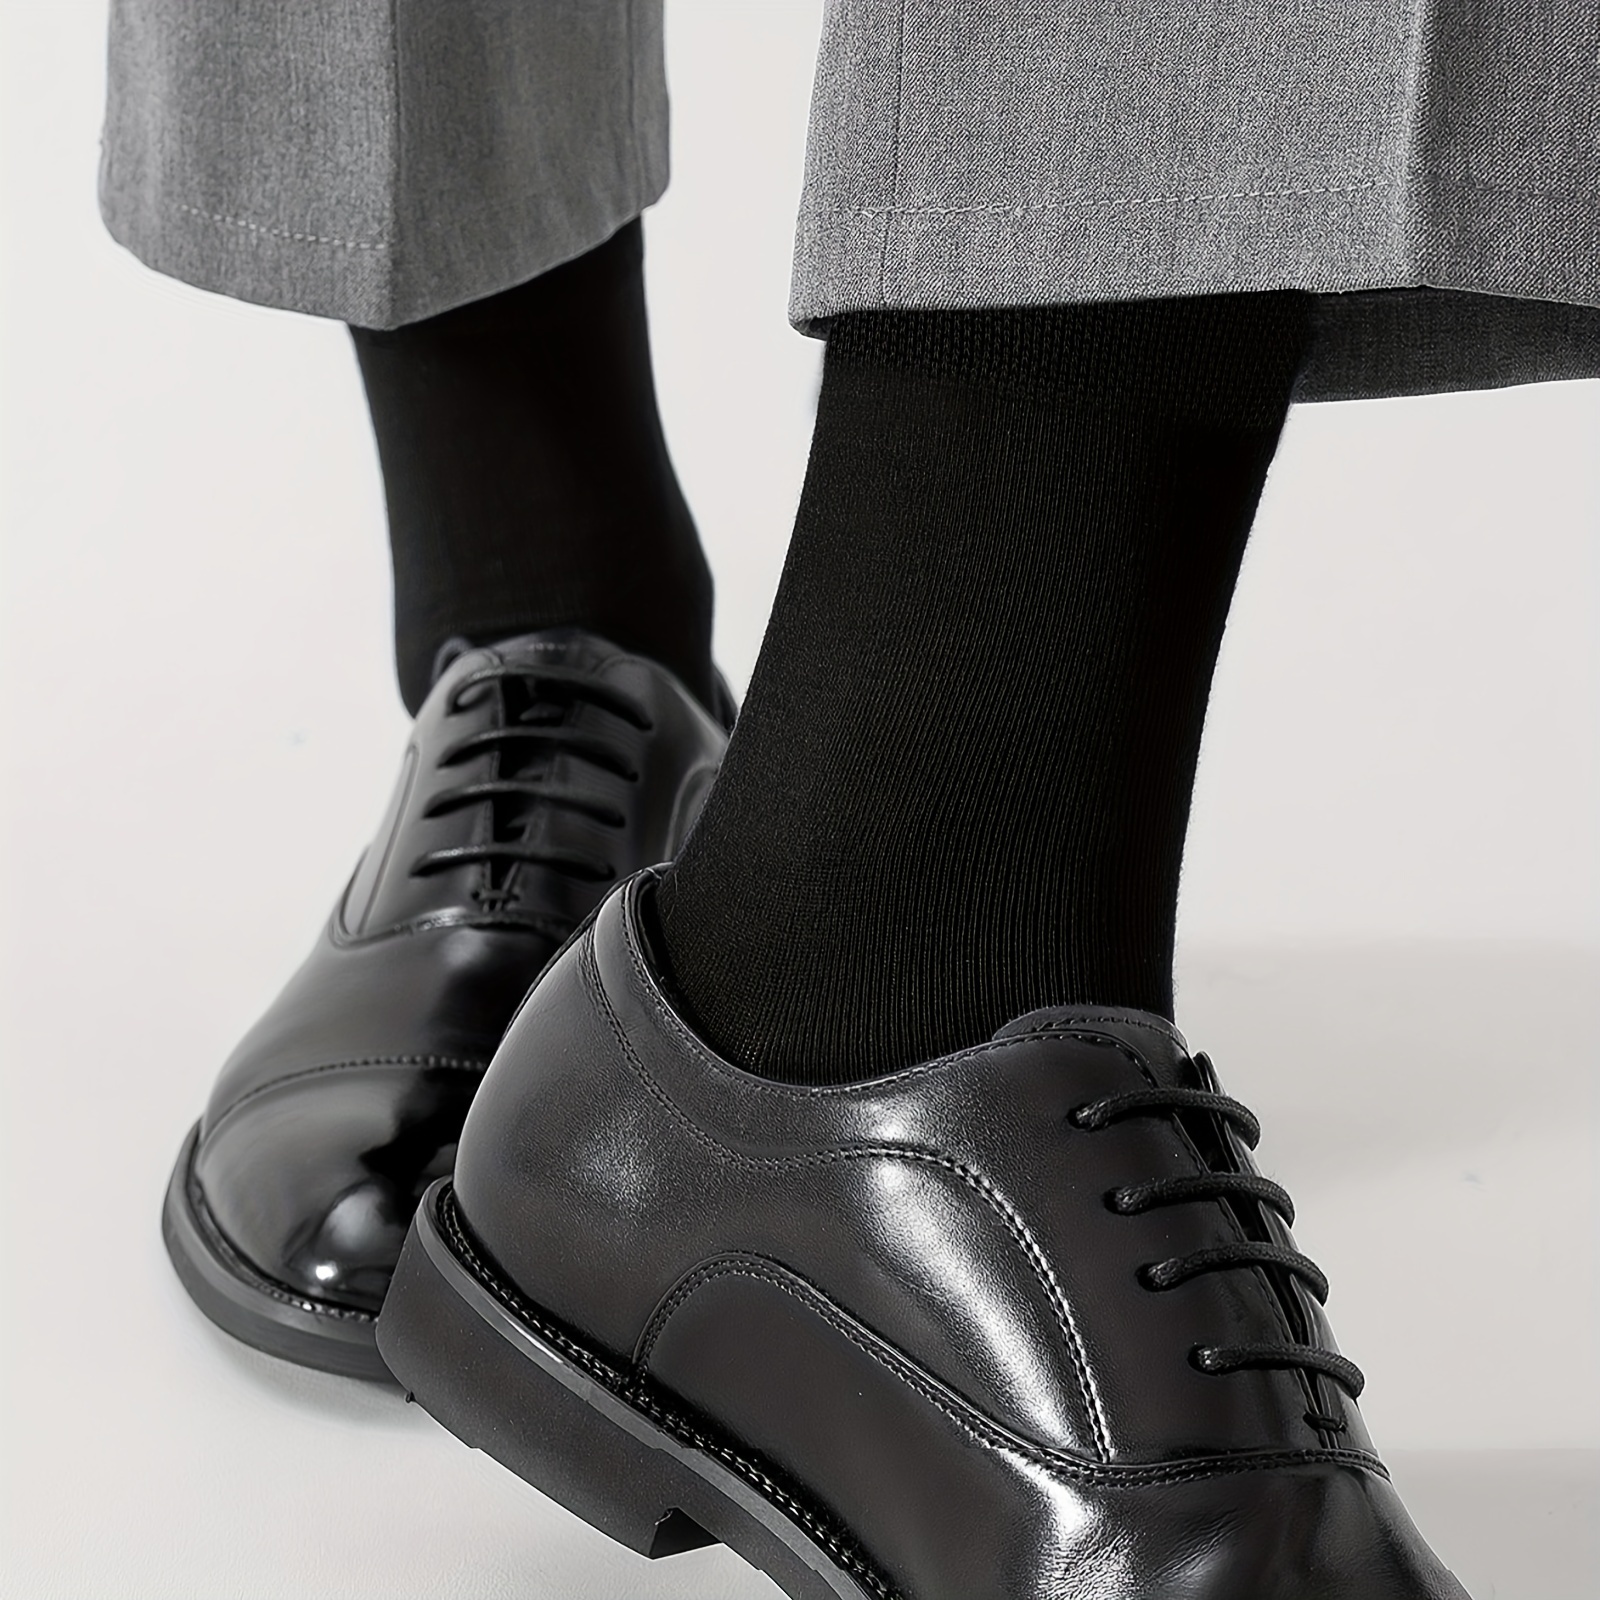 ProductJK Calcetines de algodón transpirable para hombre, casual,  calcetines negros clásicos, 5 pares (S - 6-7), Negro 